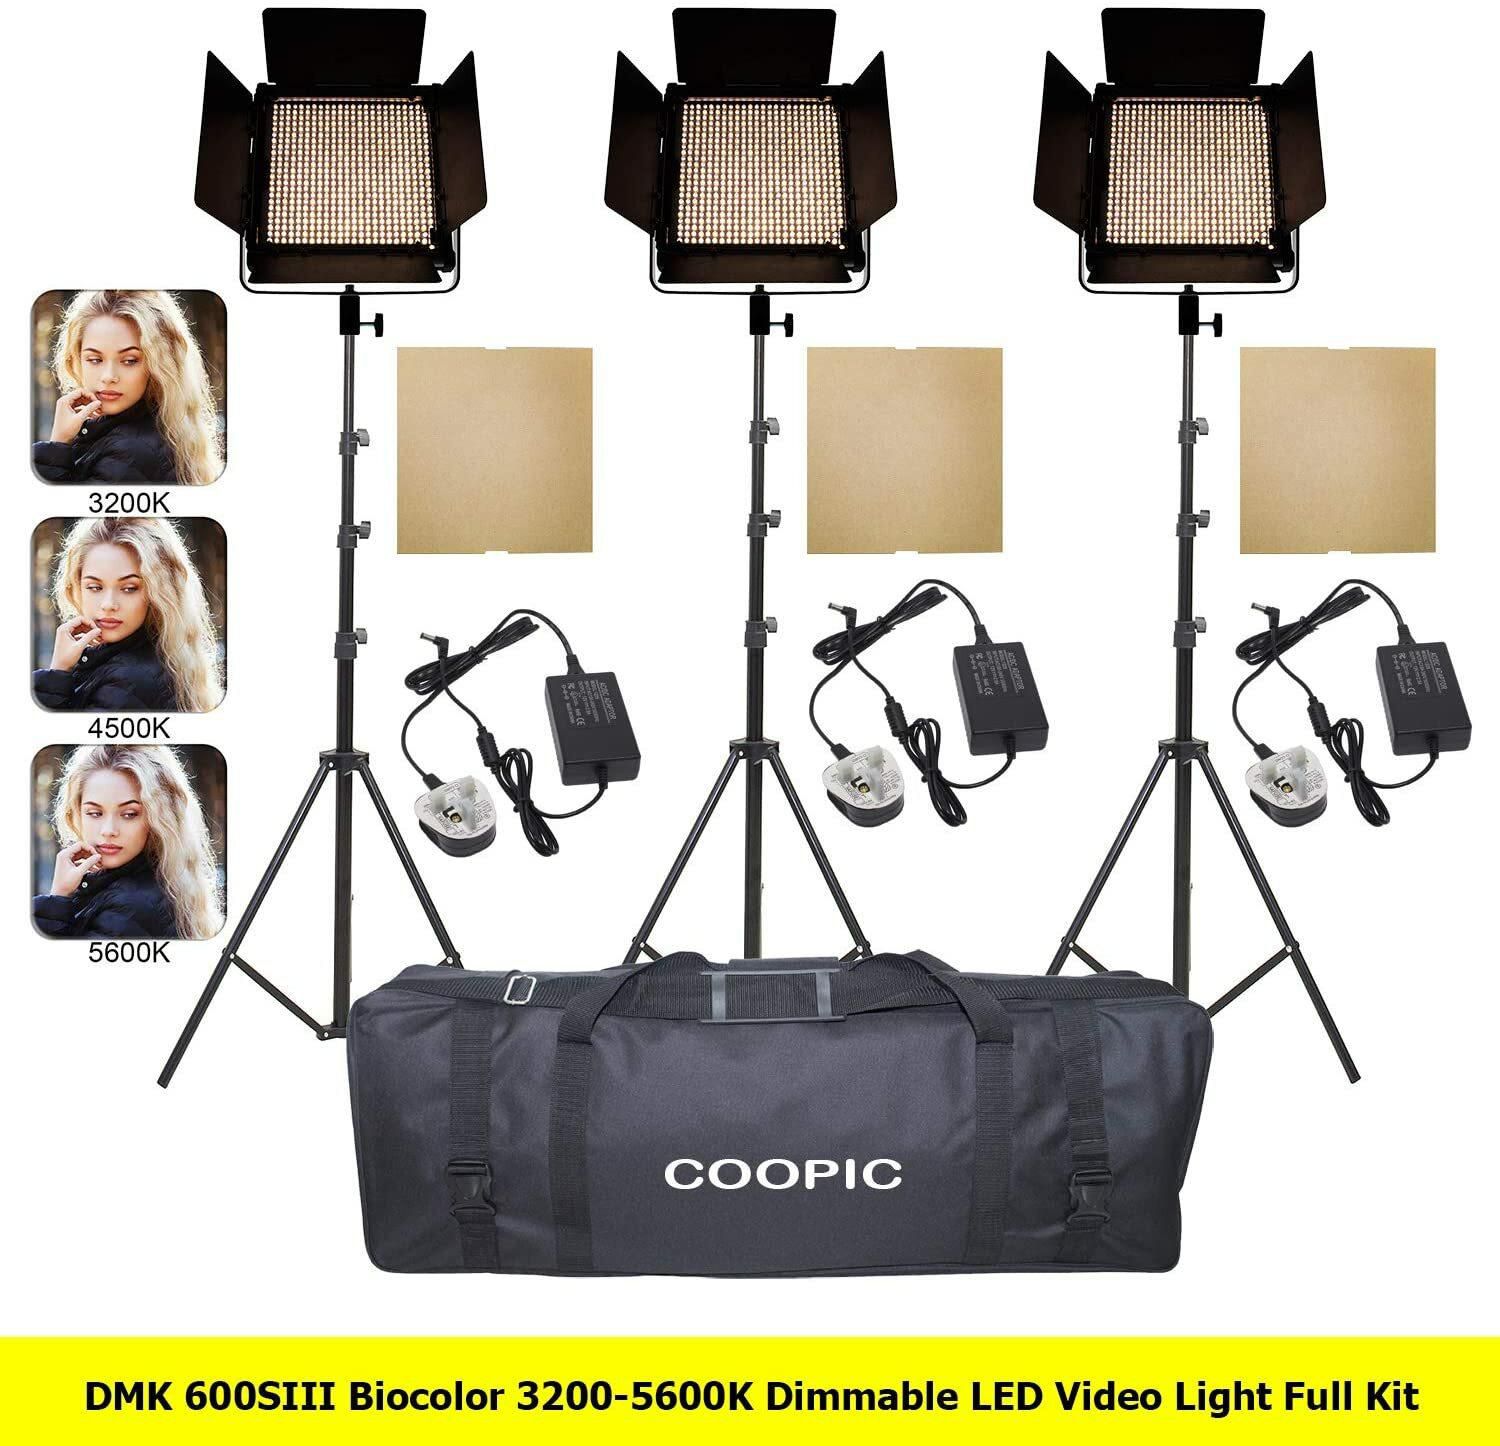 DMK Power Coopic 3 Pack Dmk-600Siii Bi-Color Professional LED Video Light Kit: (3) Dmk-600Siii Light With U Metal Bracket (3) Light Stands (3) Filter (3) Adapter (1) Carrying Bag